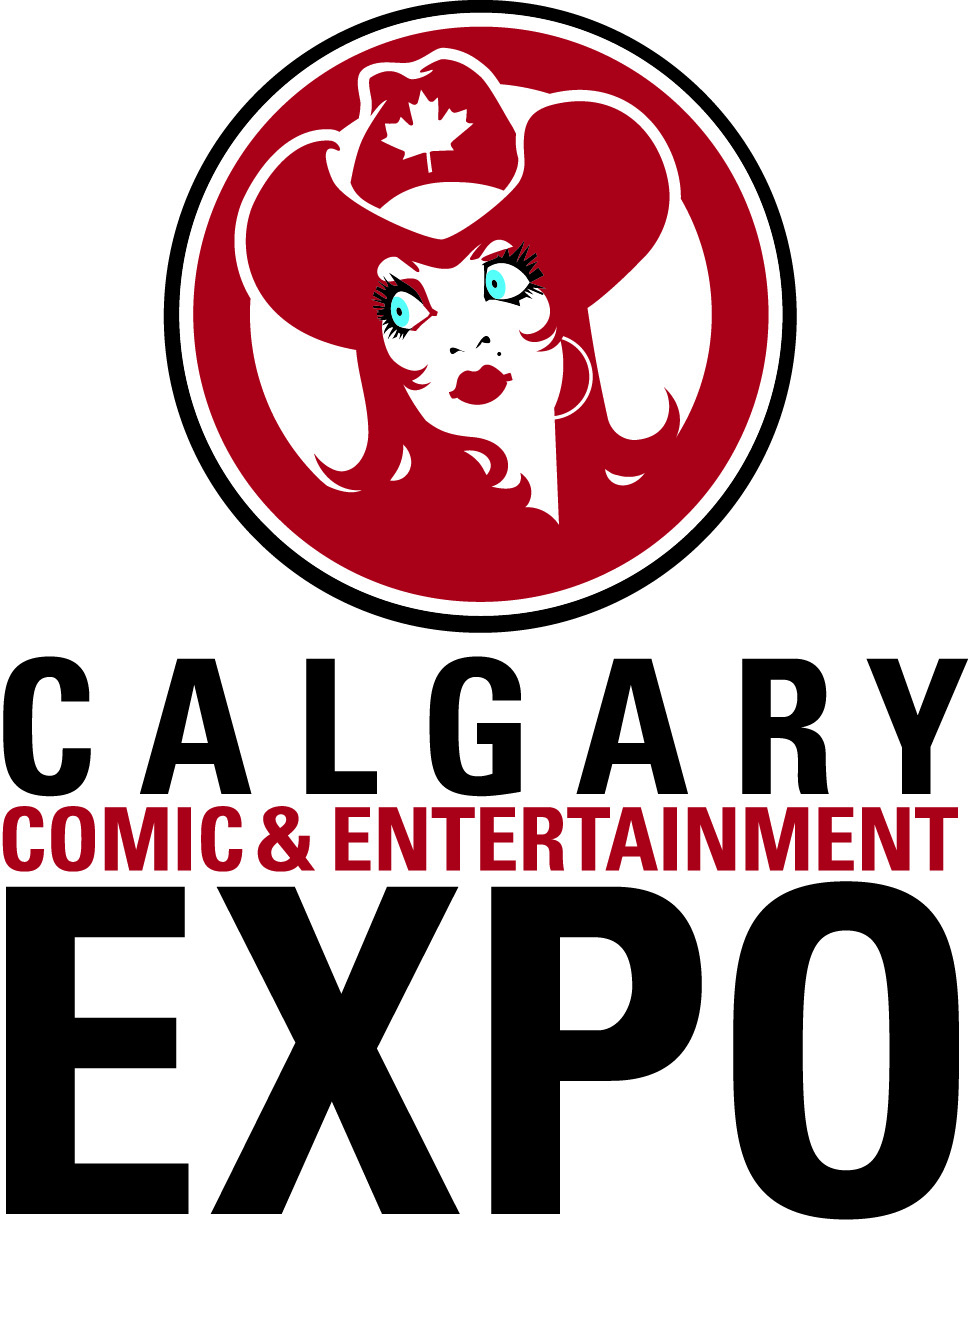 Heading to the Calgary Comic Expo!